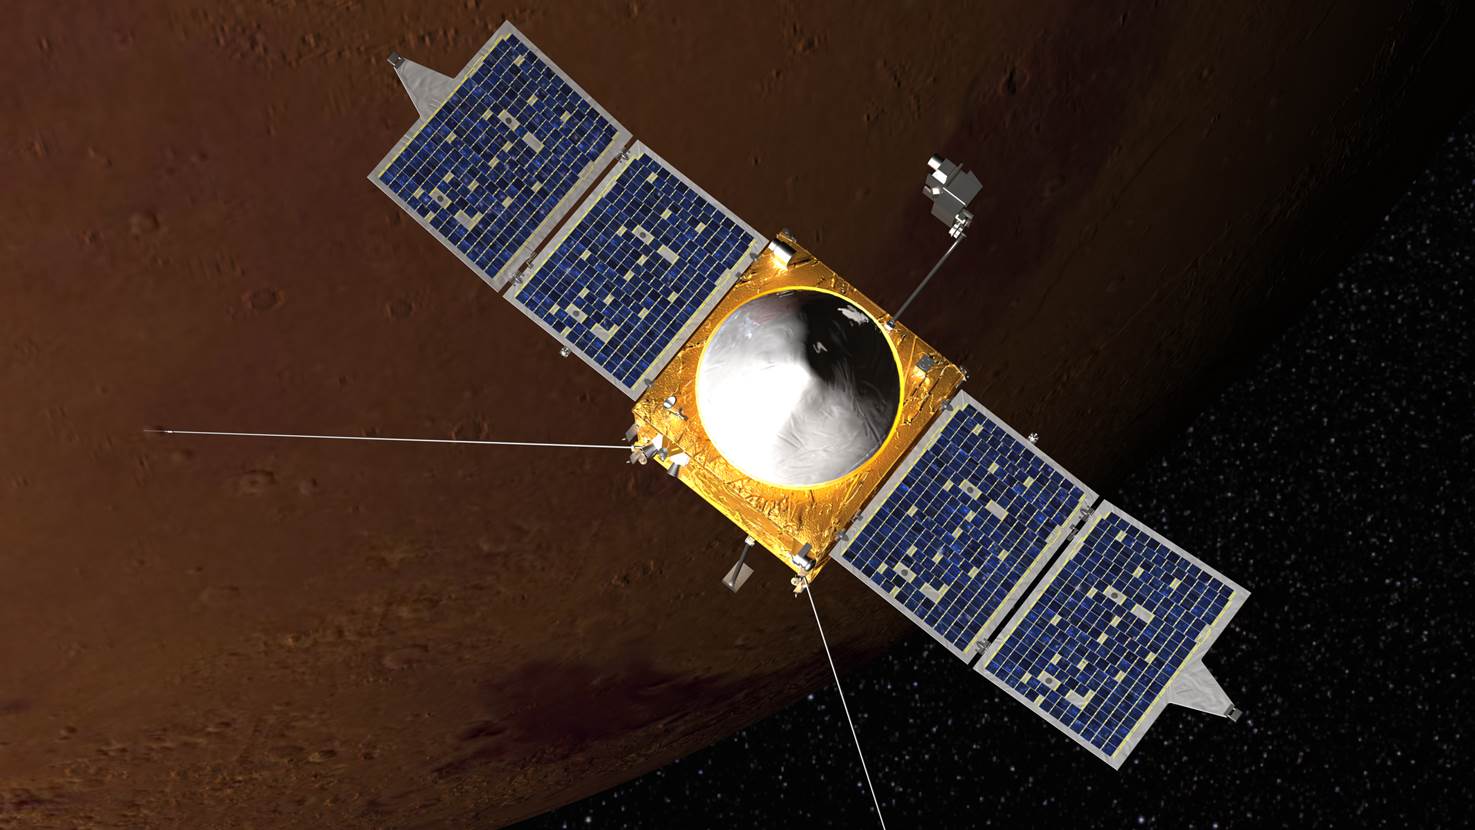 NASA MAVEN spacecraft image credit NASA posted on AmericaSpace Mars